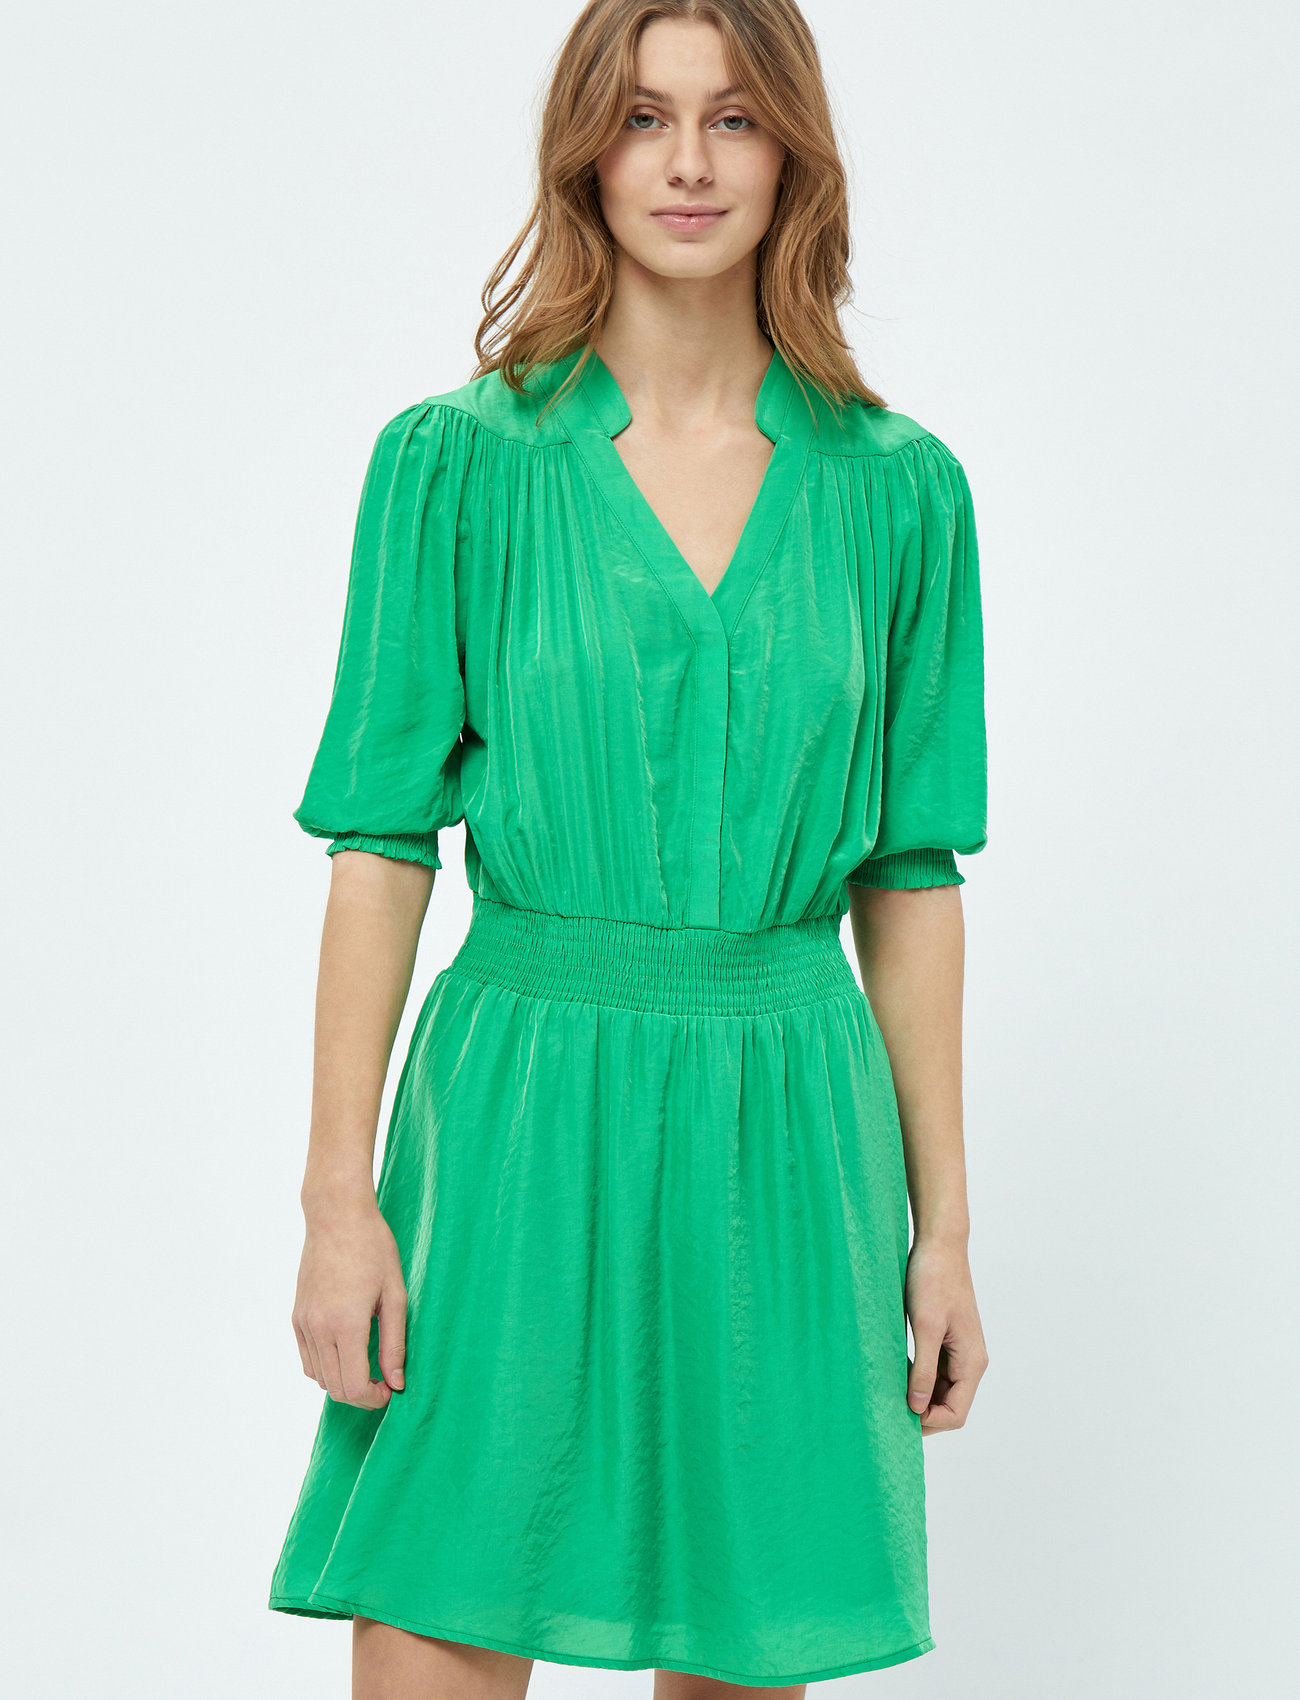 Minus - Ayame Short Dress - skjortklänningar - island green - 0